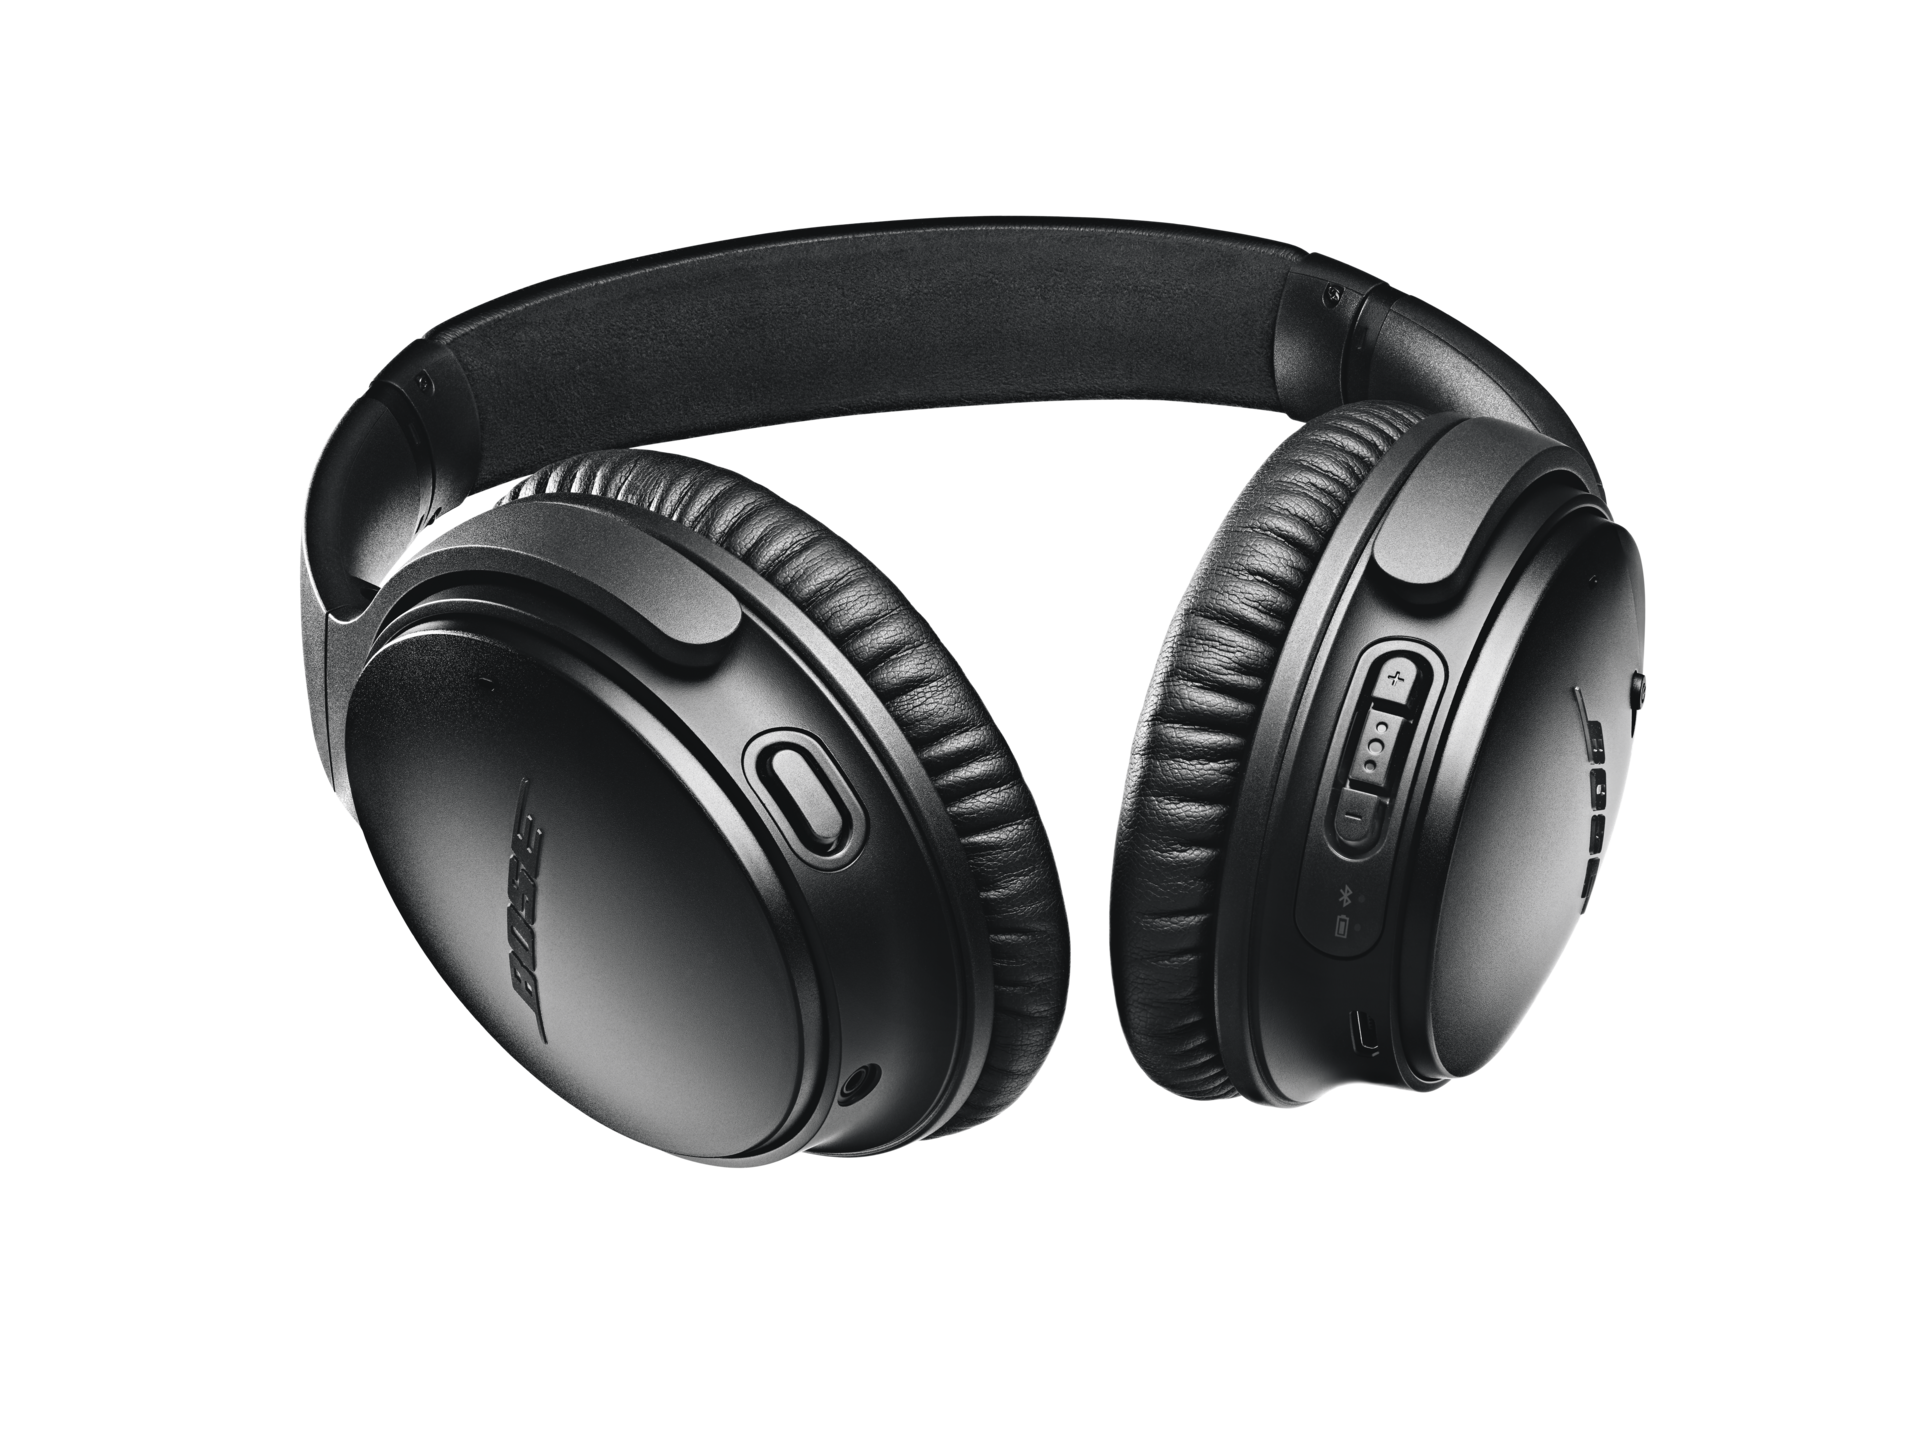 Bose QuietComfort 35 QC35 series II Wireless Headphones Noise-Cancelling  Silver